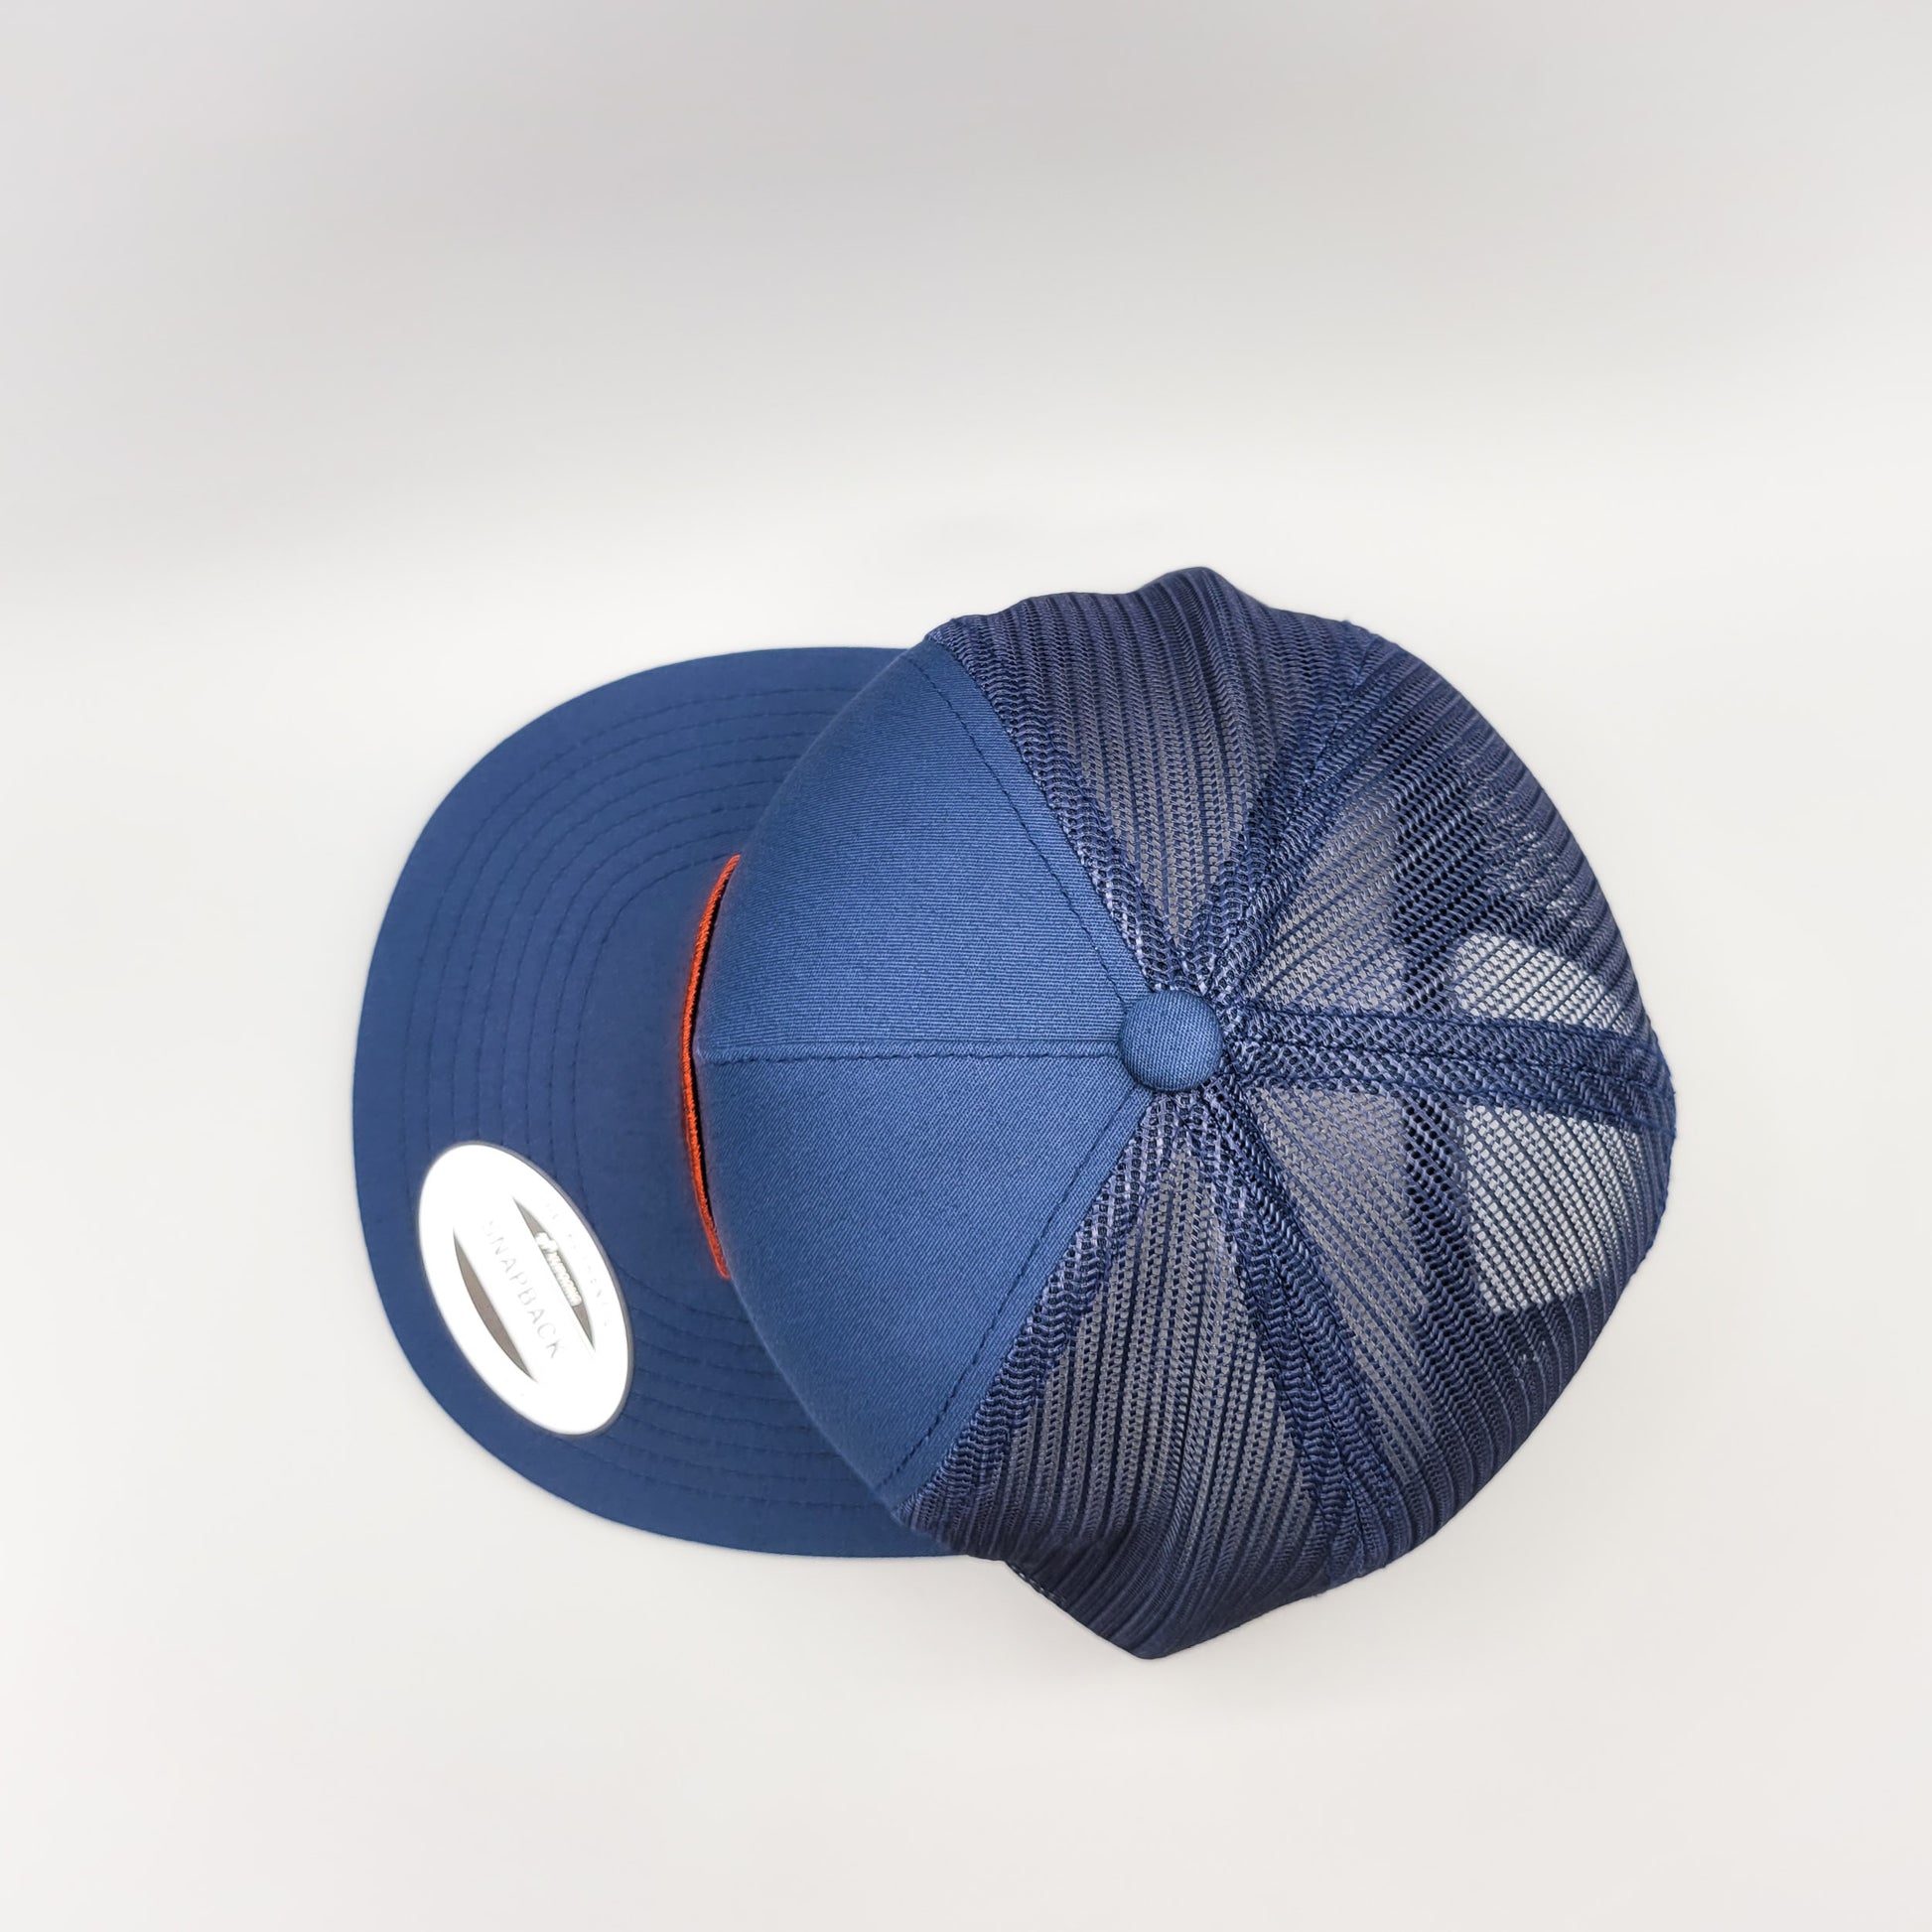 Bagley Fishing Lure Hat- Distressed Royal Blue Snapback